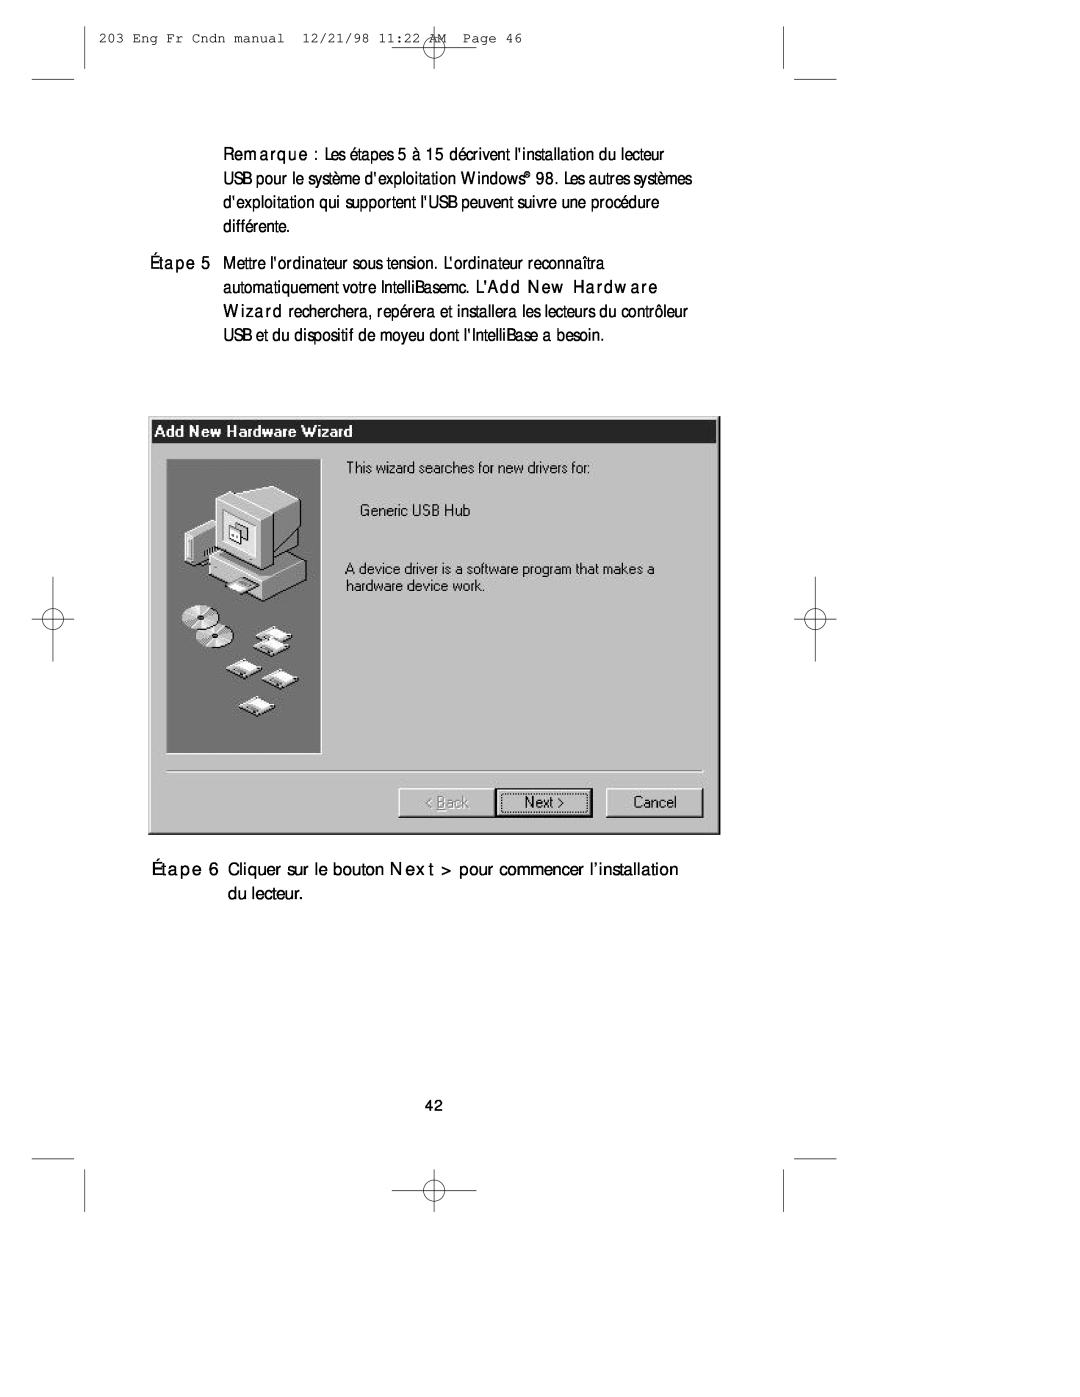 NEC USB user manual 